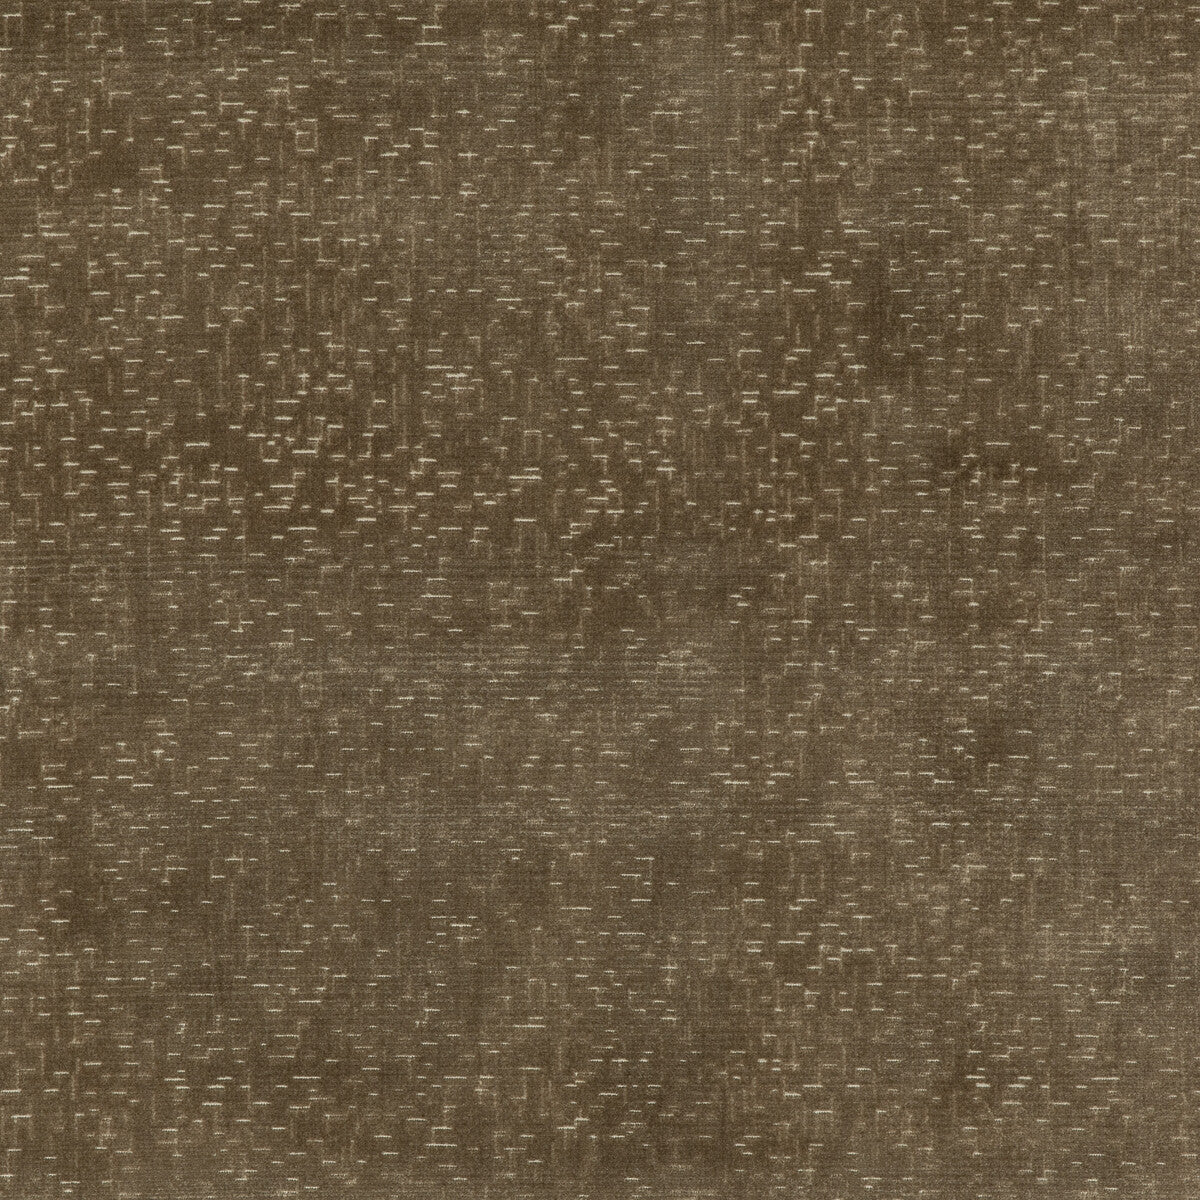 Alma Velvet fabric in mole color - pattern BF10827.240.0 - by G P &amp; J Baker in the Coromandel Velvets collection